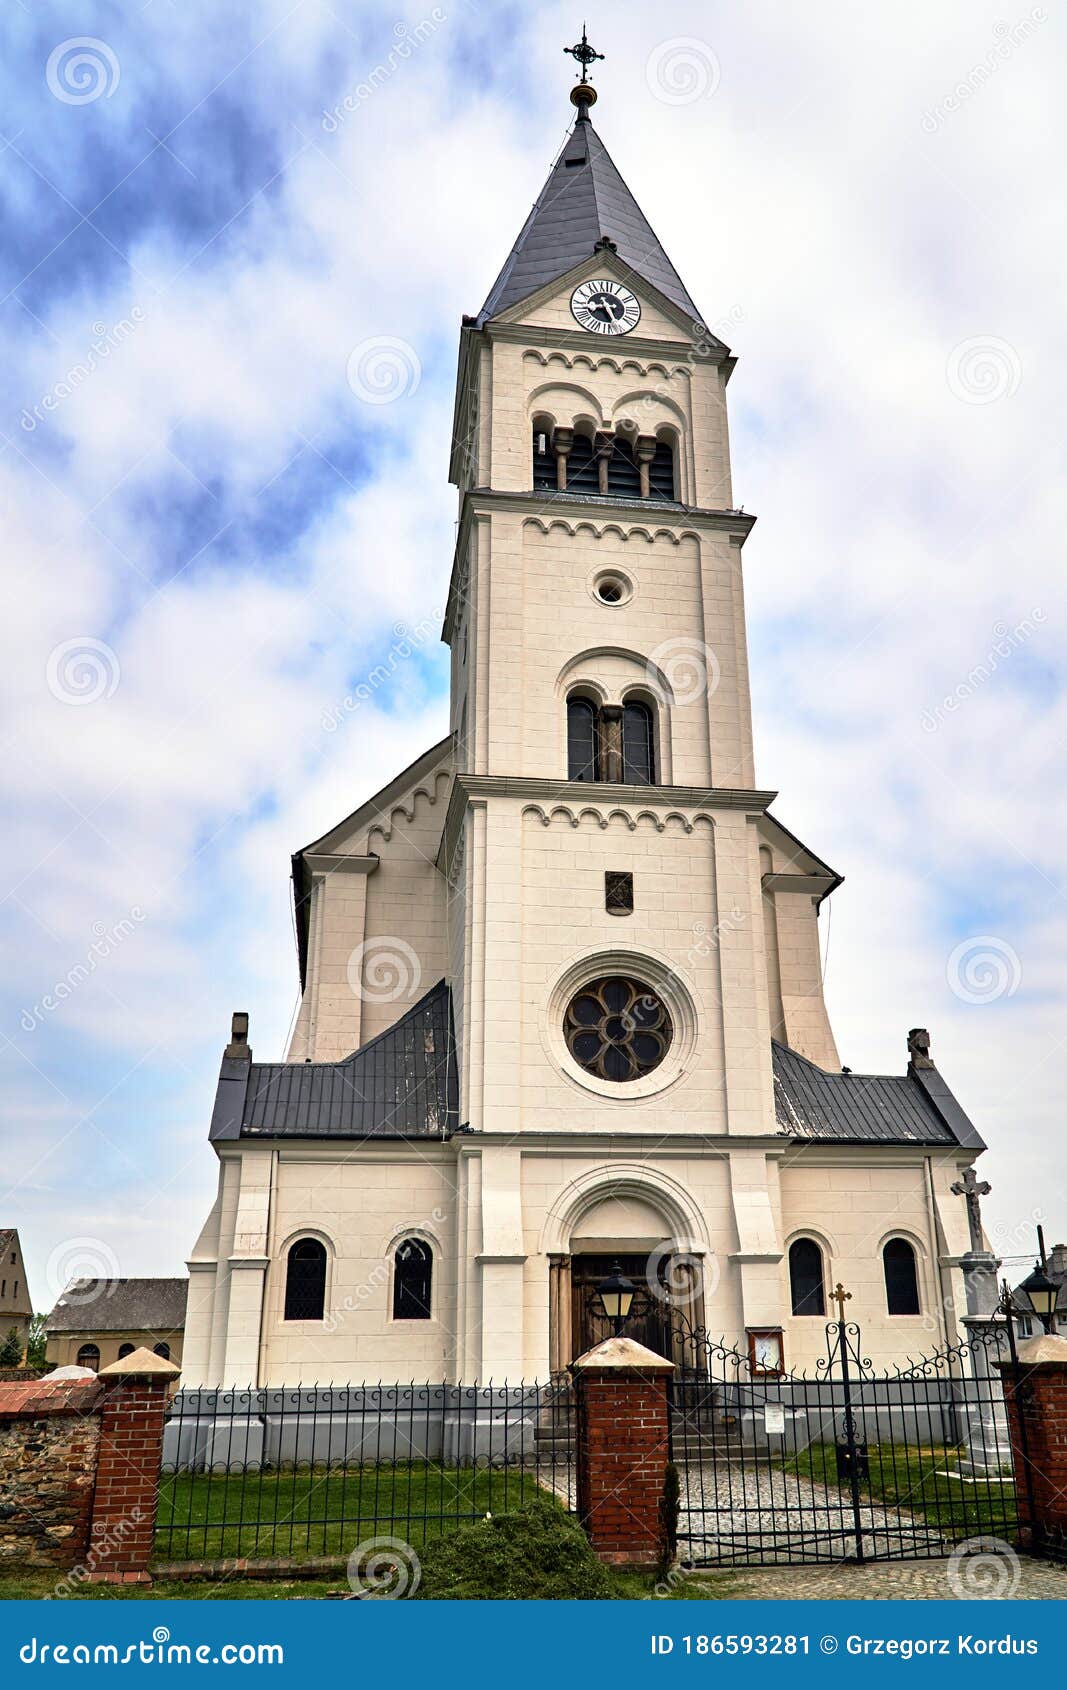 a historic parochial church with a belfry